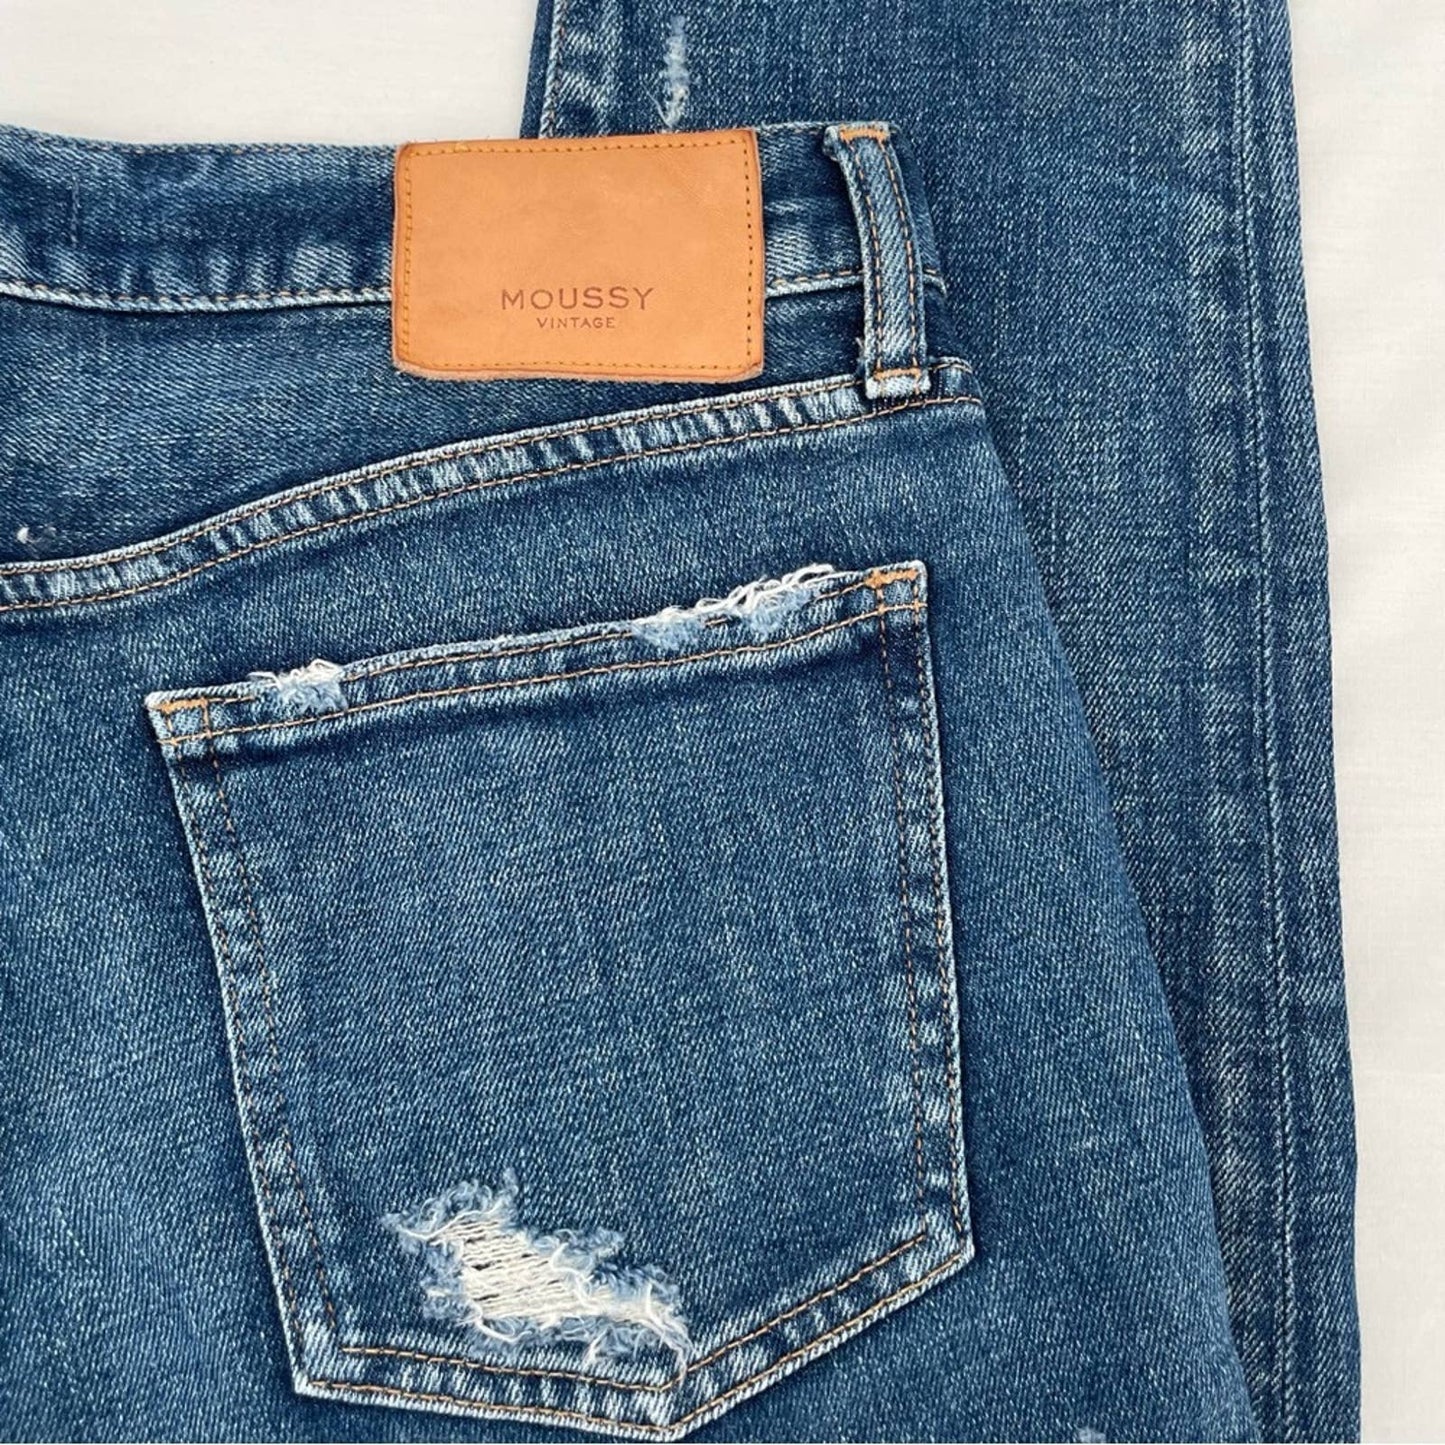 Moussy Glendele Skinny Jeans in Blue 29 Distressed Raw Chewed Hem Style 025DAC12-2111 Size 29